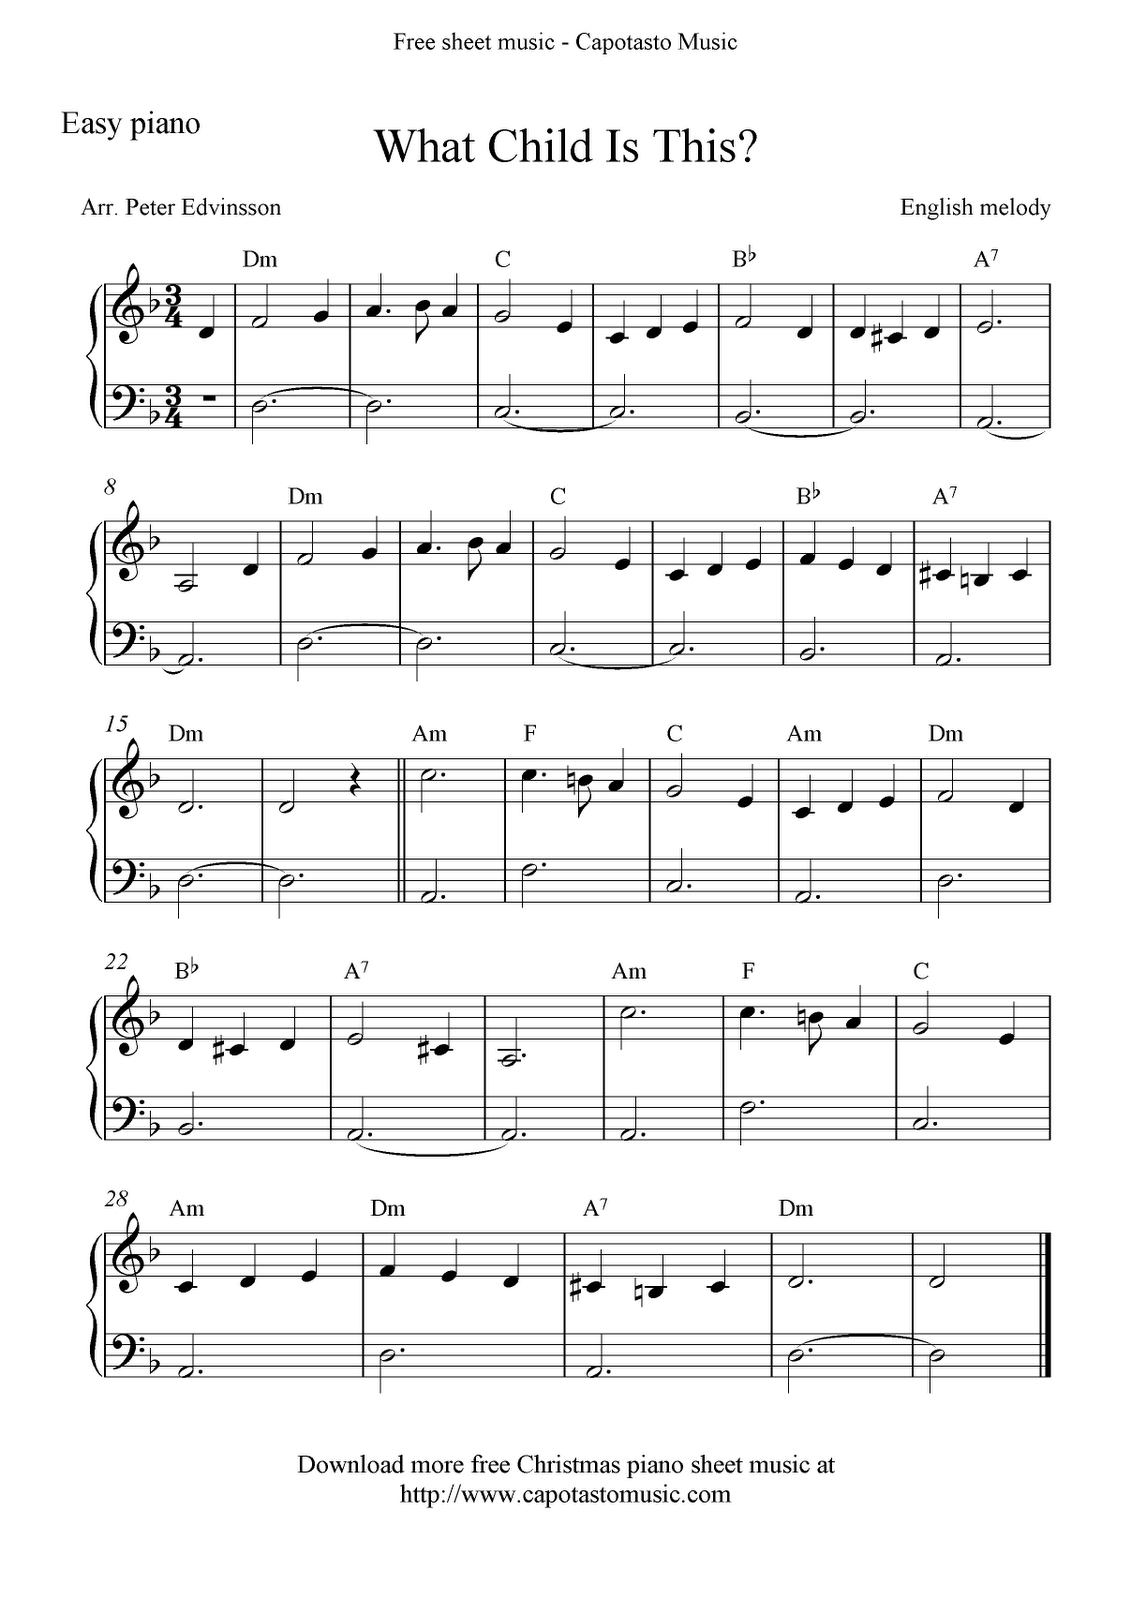 Free Printable Christmas Sheet Music | Free Sheet Music Scores: Free - Free Printable Christmas Sheet Music For Piano